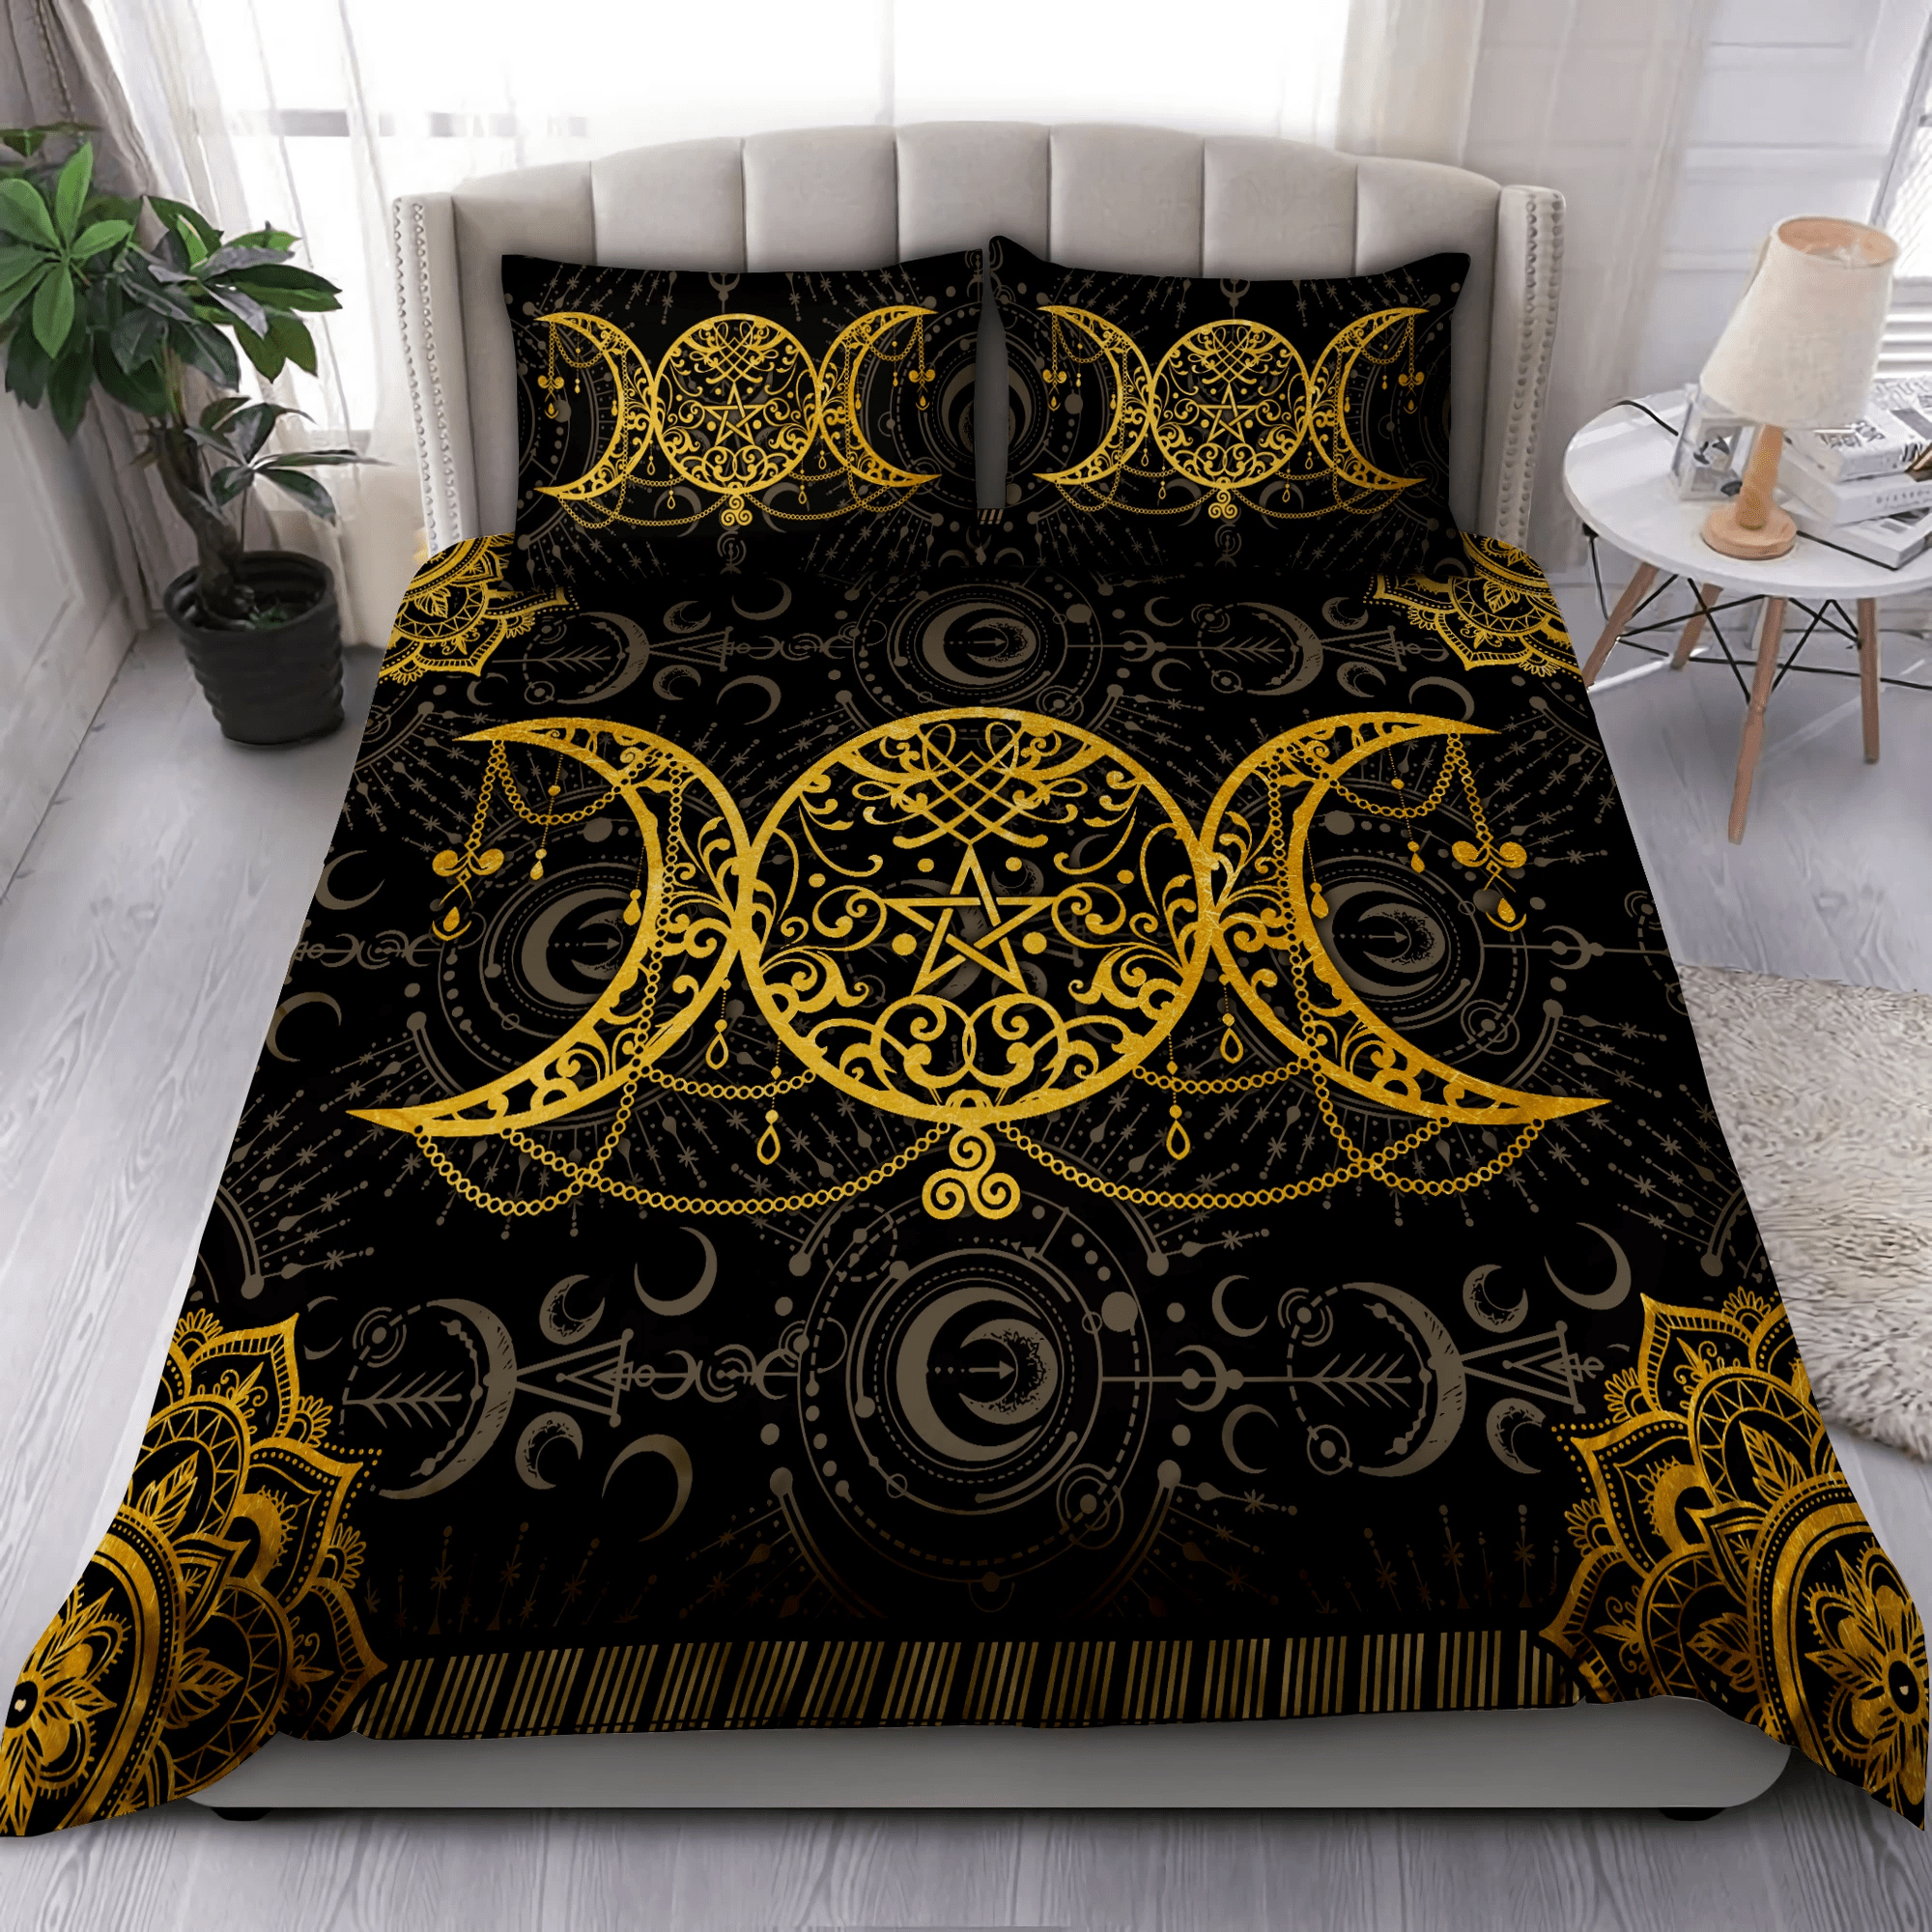 Mandala Wicca Triple Moon Duvet Cover Bedding Set